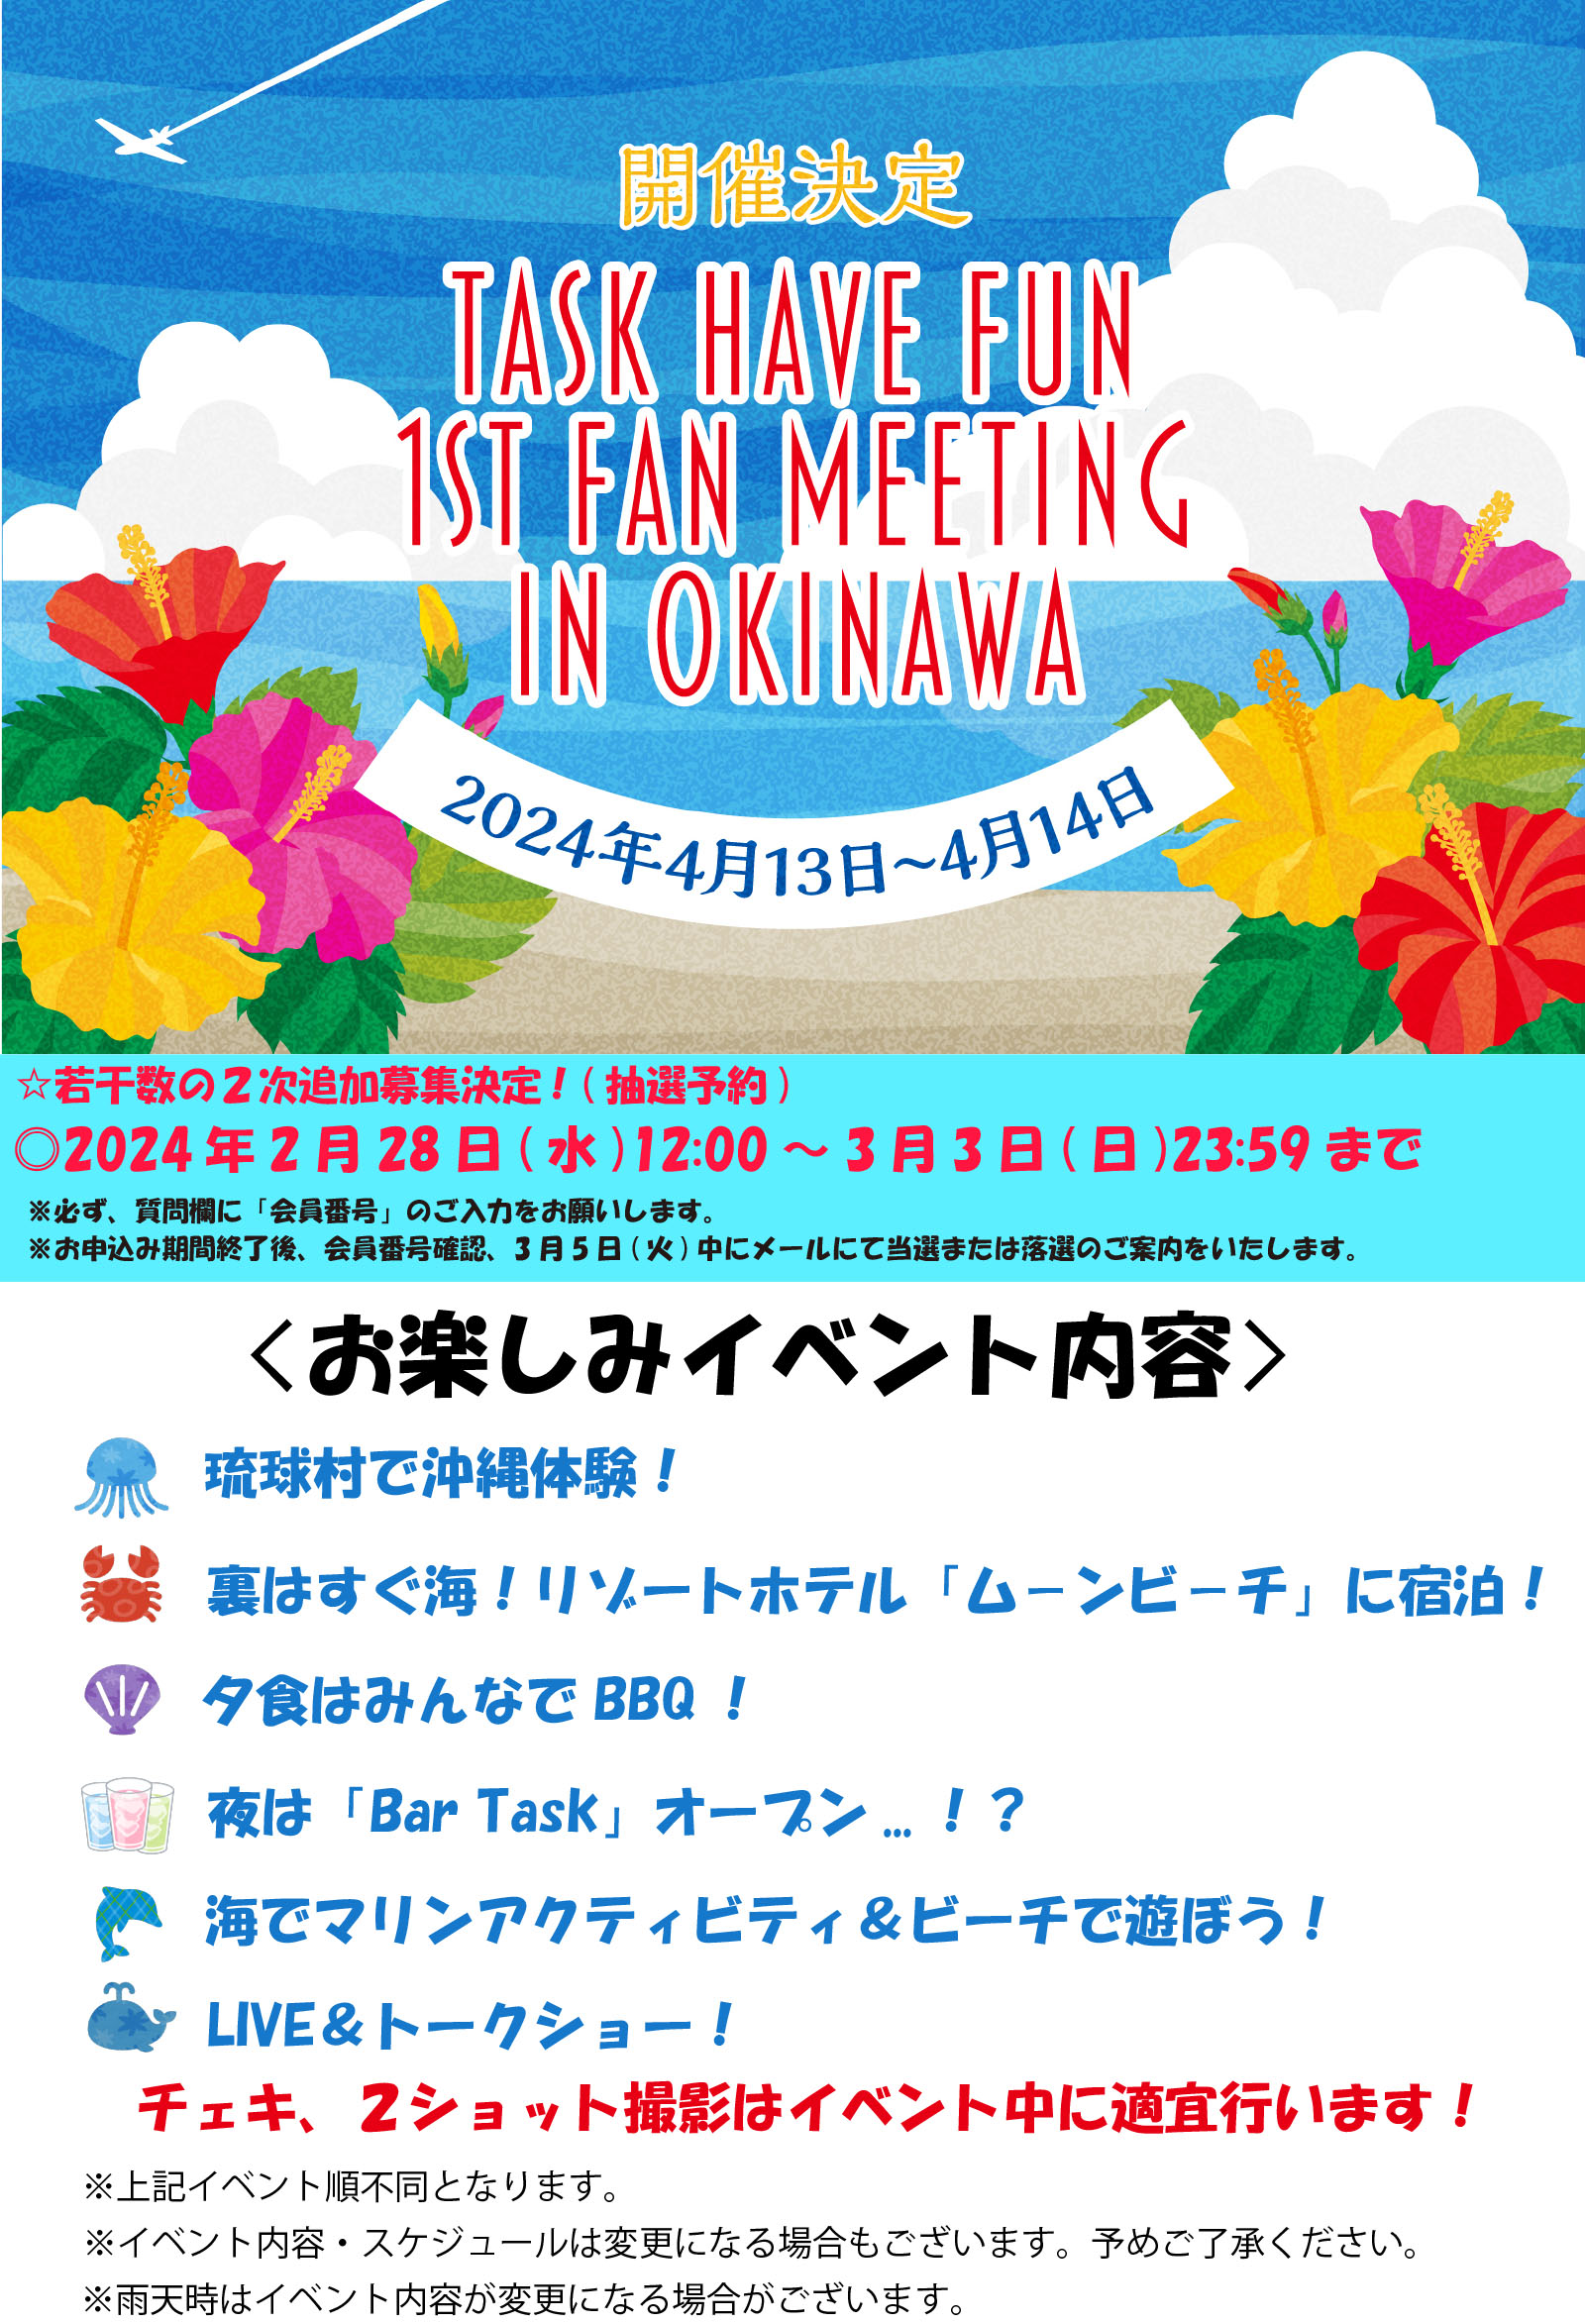 TaskhaveFun「Task+club」in OKINAWA